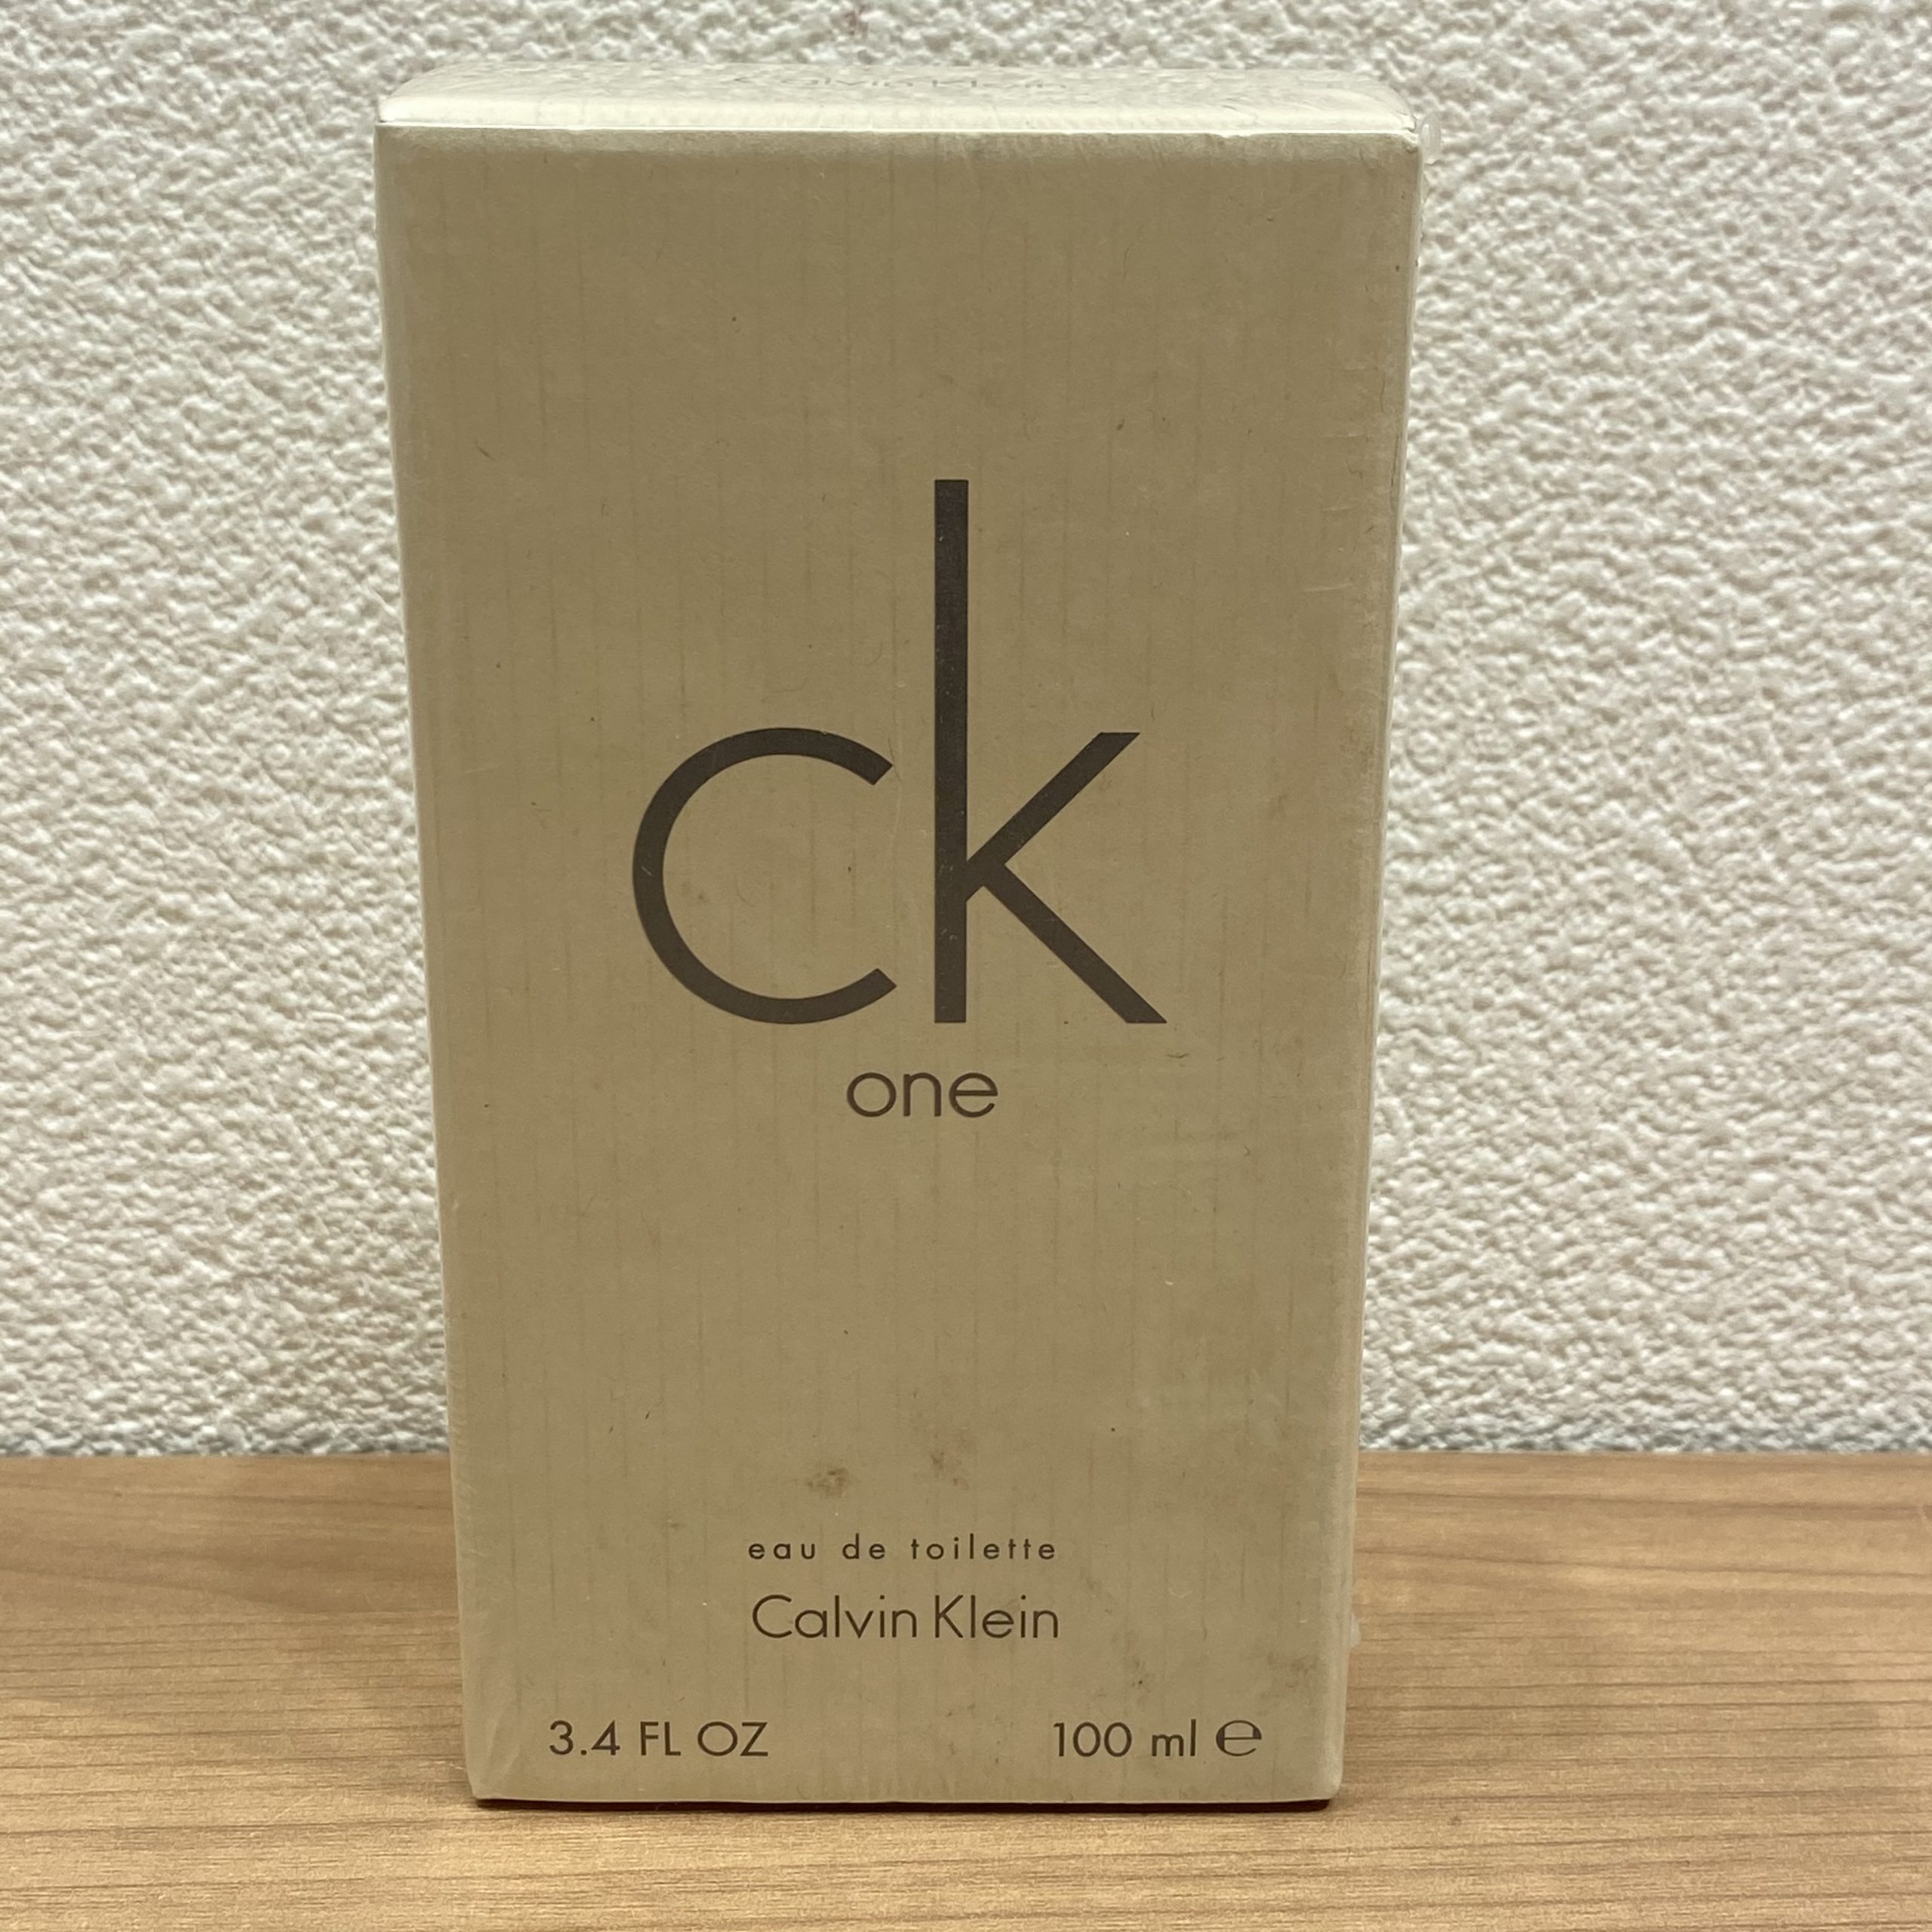 【Calvin Klein/カルバンクライン】CK one/シーケーワン 100ml